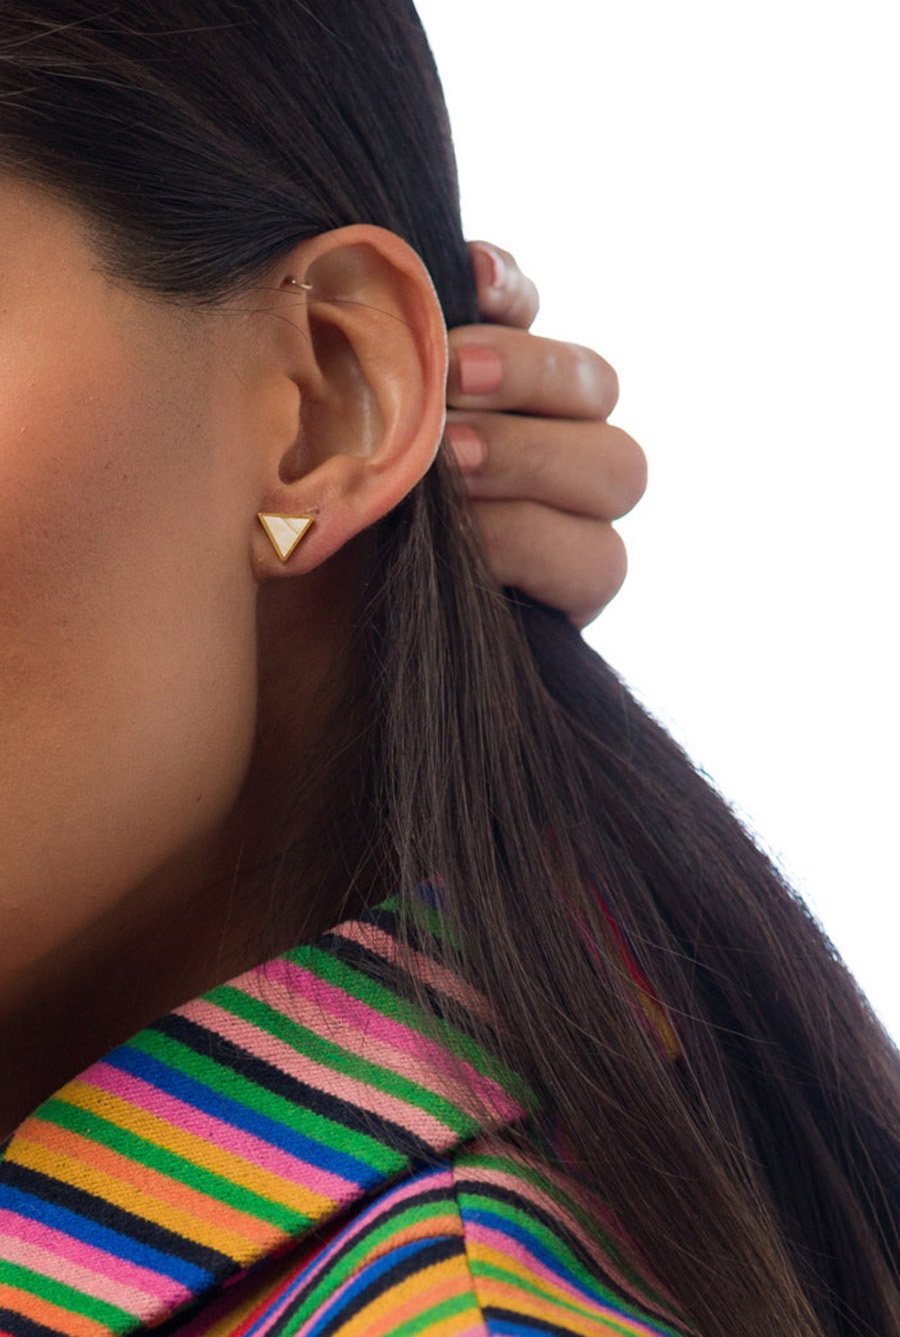 'Tri Me' Triangle Stud Earrings - Earrings - The Green Brick Boutique